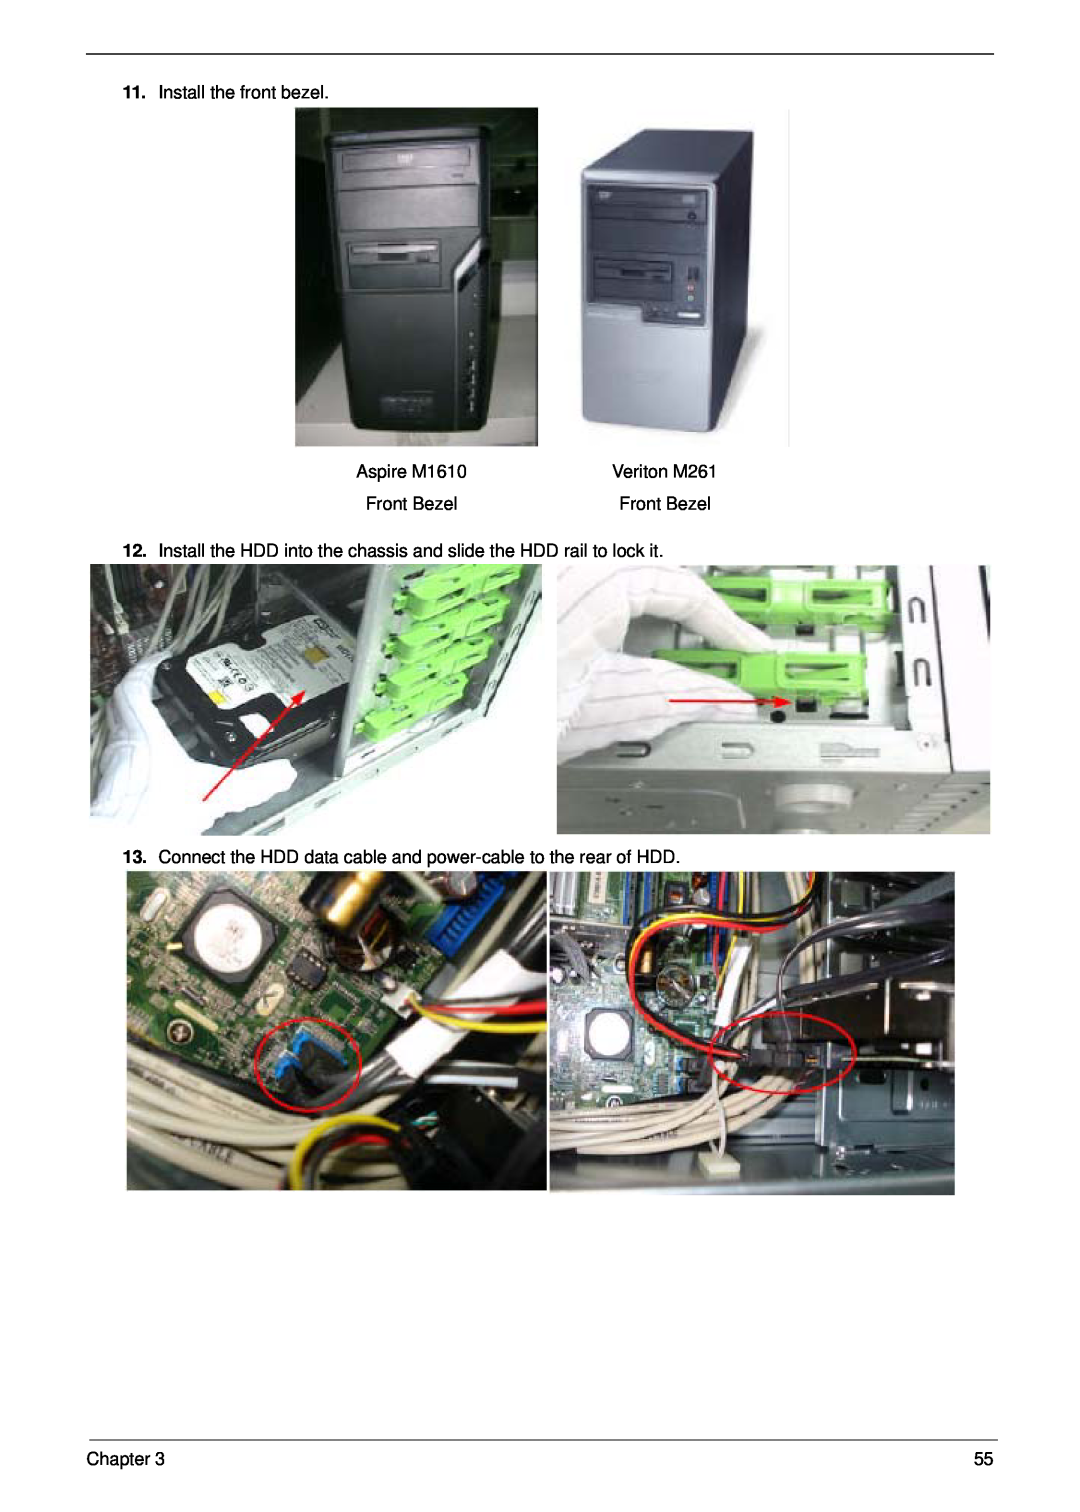 Aspire Digital manual Install the front bezel, Veriton M261, Front Bezel, Chapter, Aspire M1610 